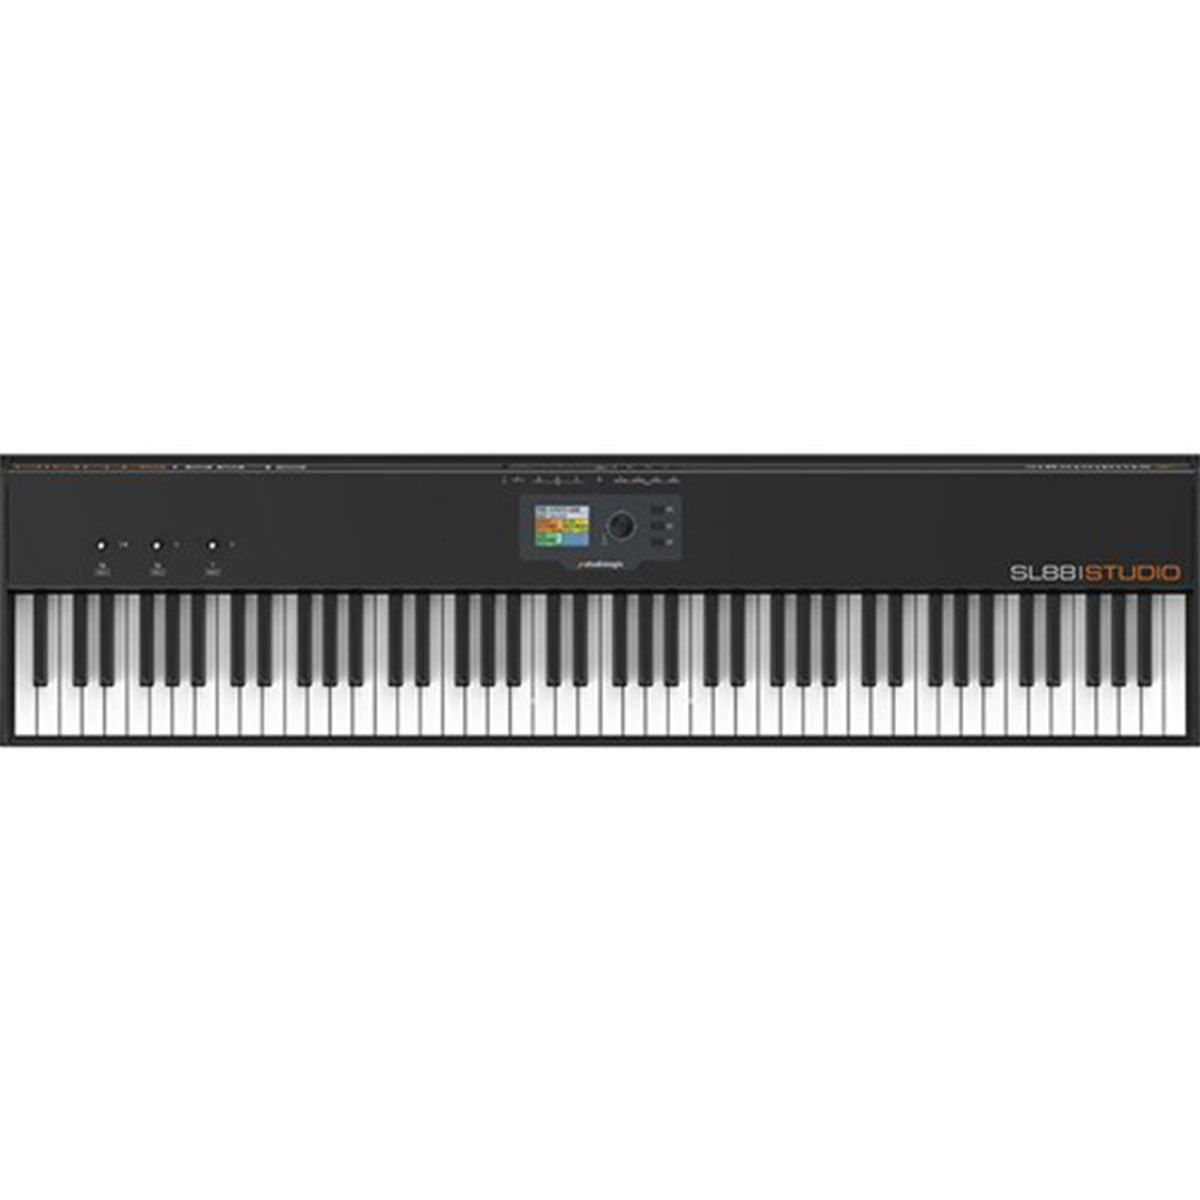 Studiologic SL88 Studio MIDI Controller 88-Key